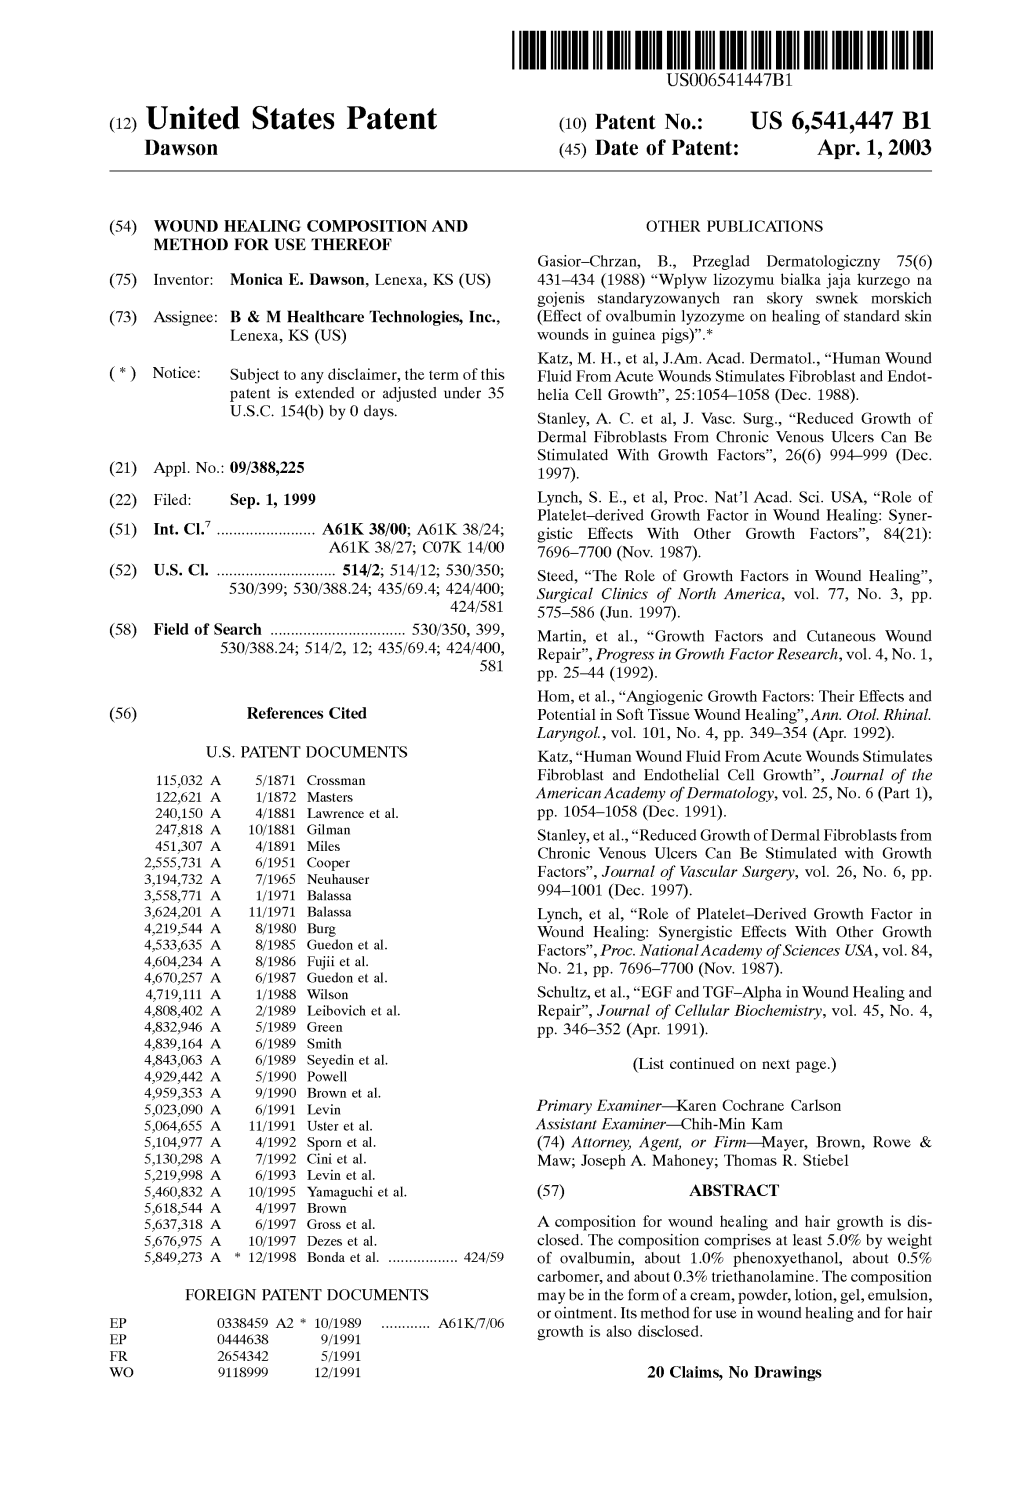 (12) United States Patent (10) Patent No.: US 6,541,447 B1 Dawson (45) Date of Patent: Apr